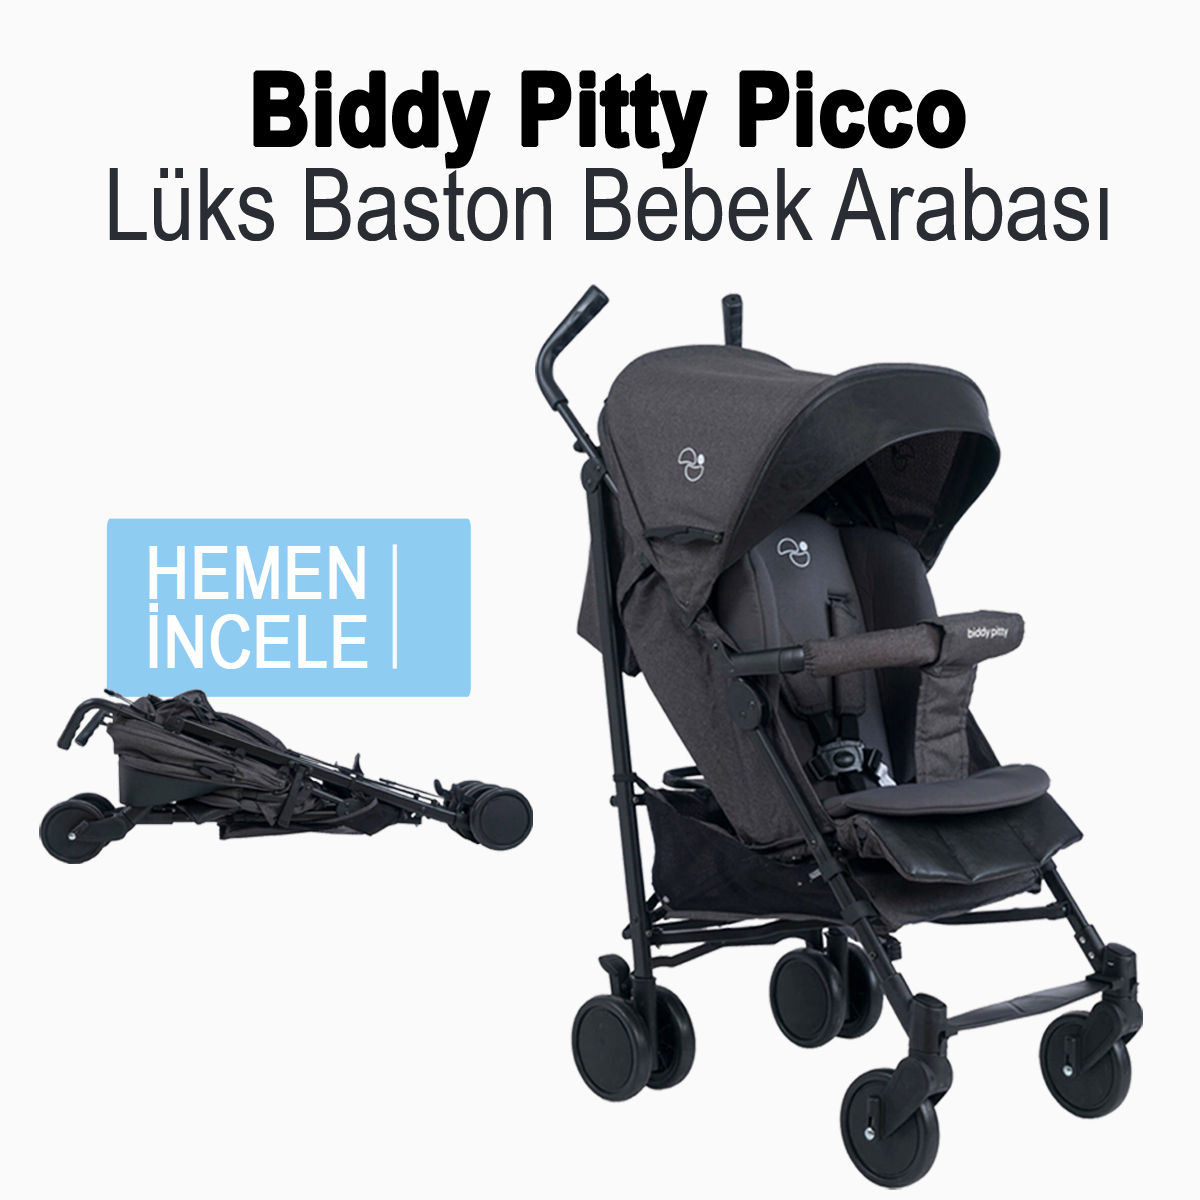 biddy pitty picco baston bebek arabası